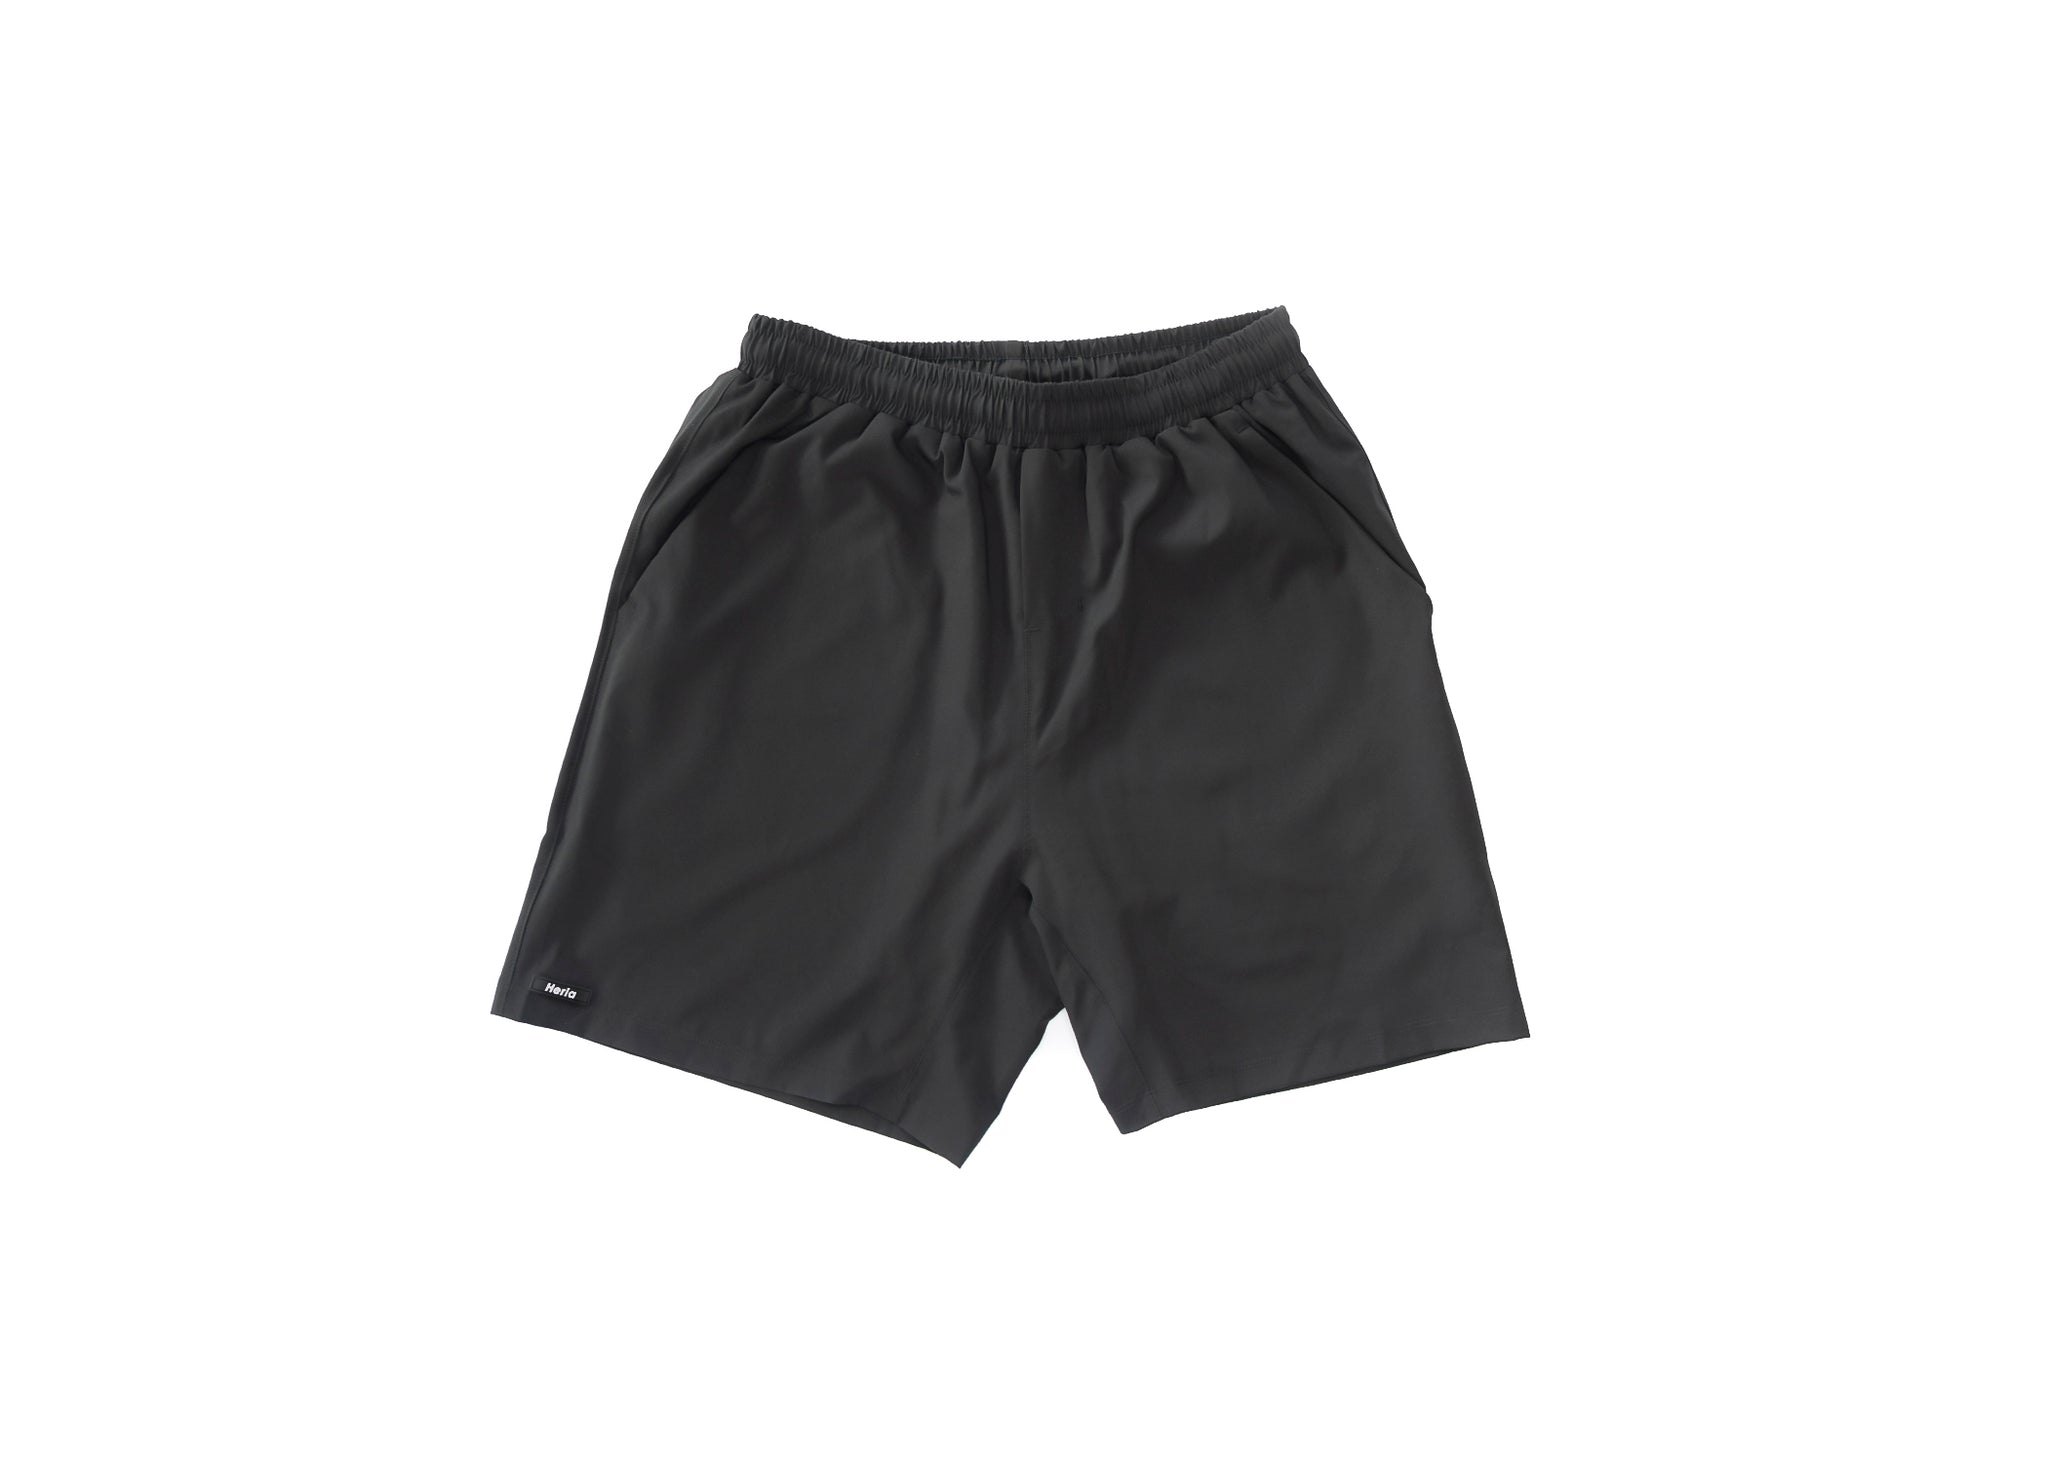 Heria Shorts - Solid Black (4629603483690)